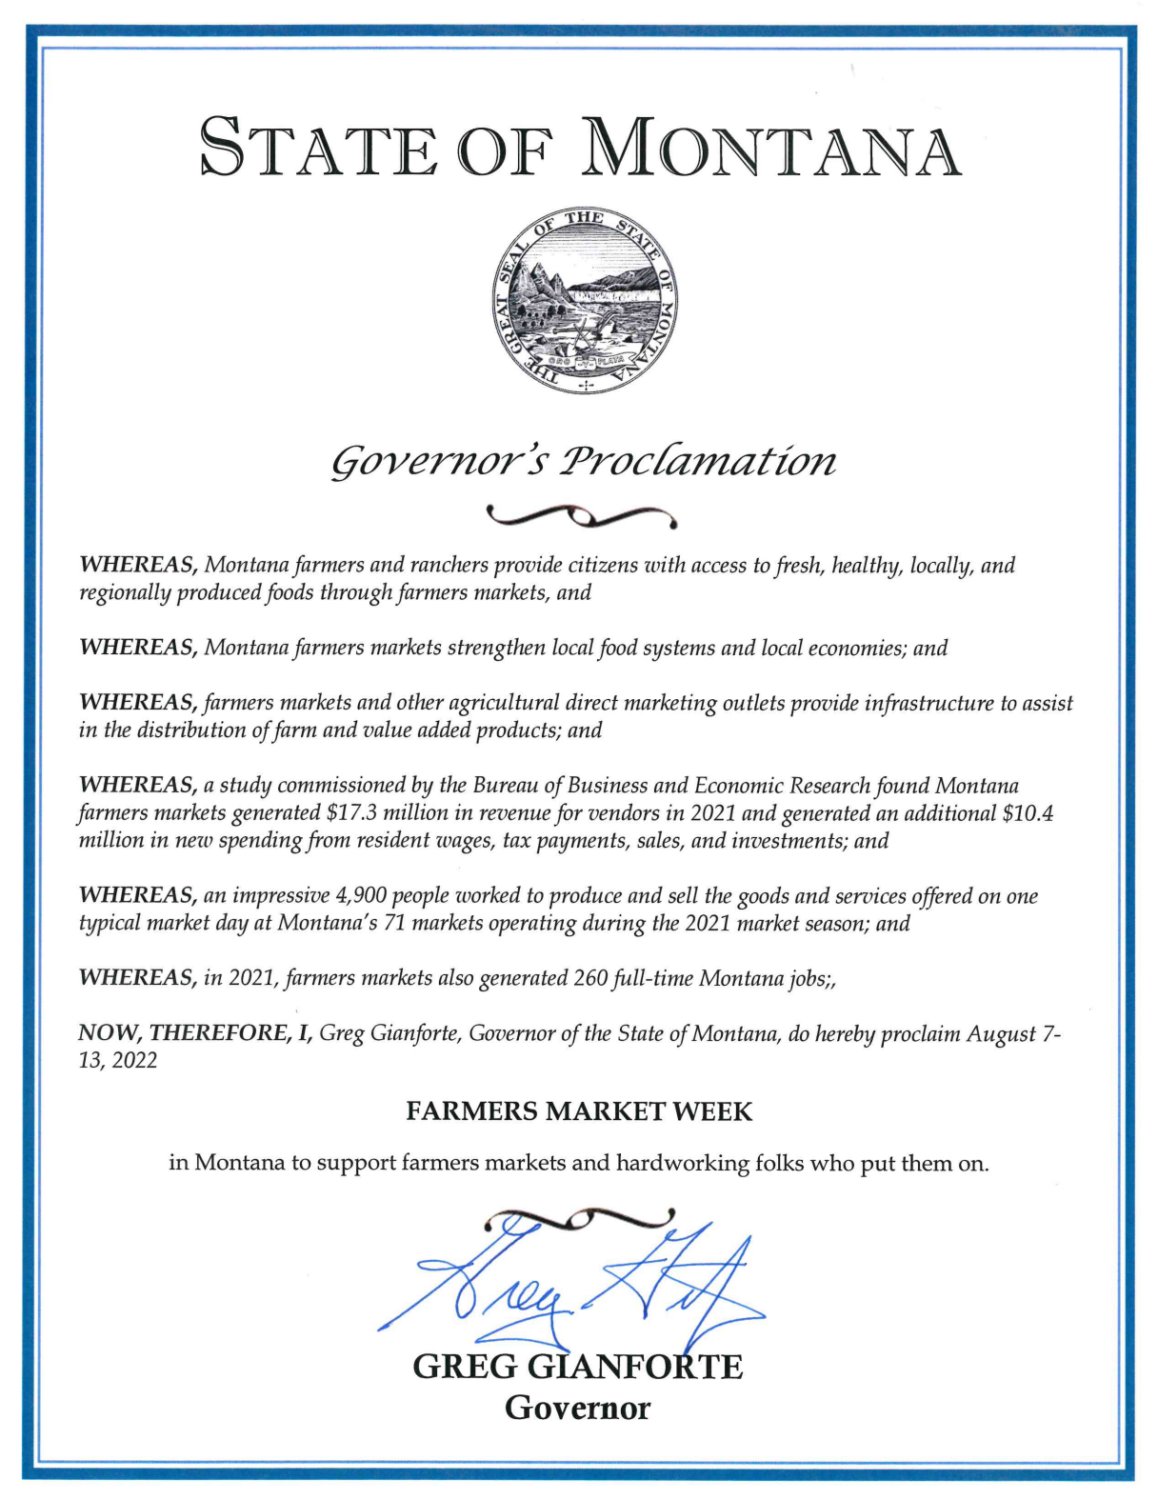 Gov. Gianforte's Proclamation of National Farmers Market Week 2022